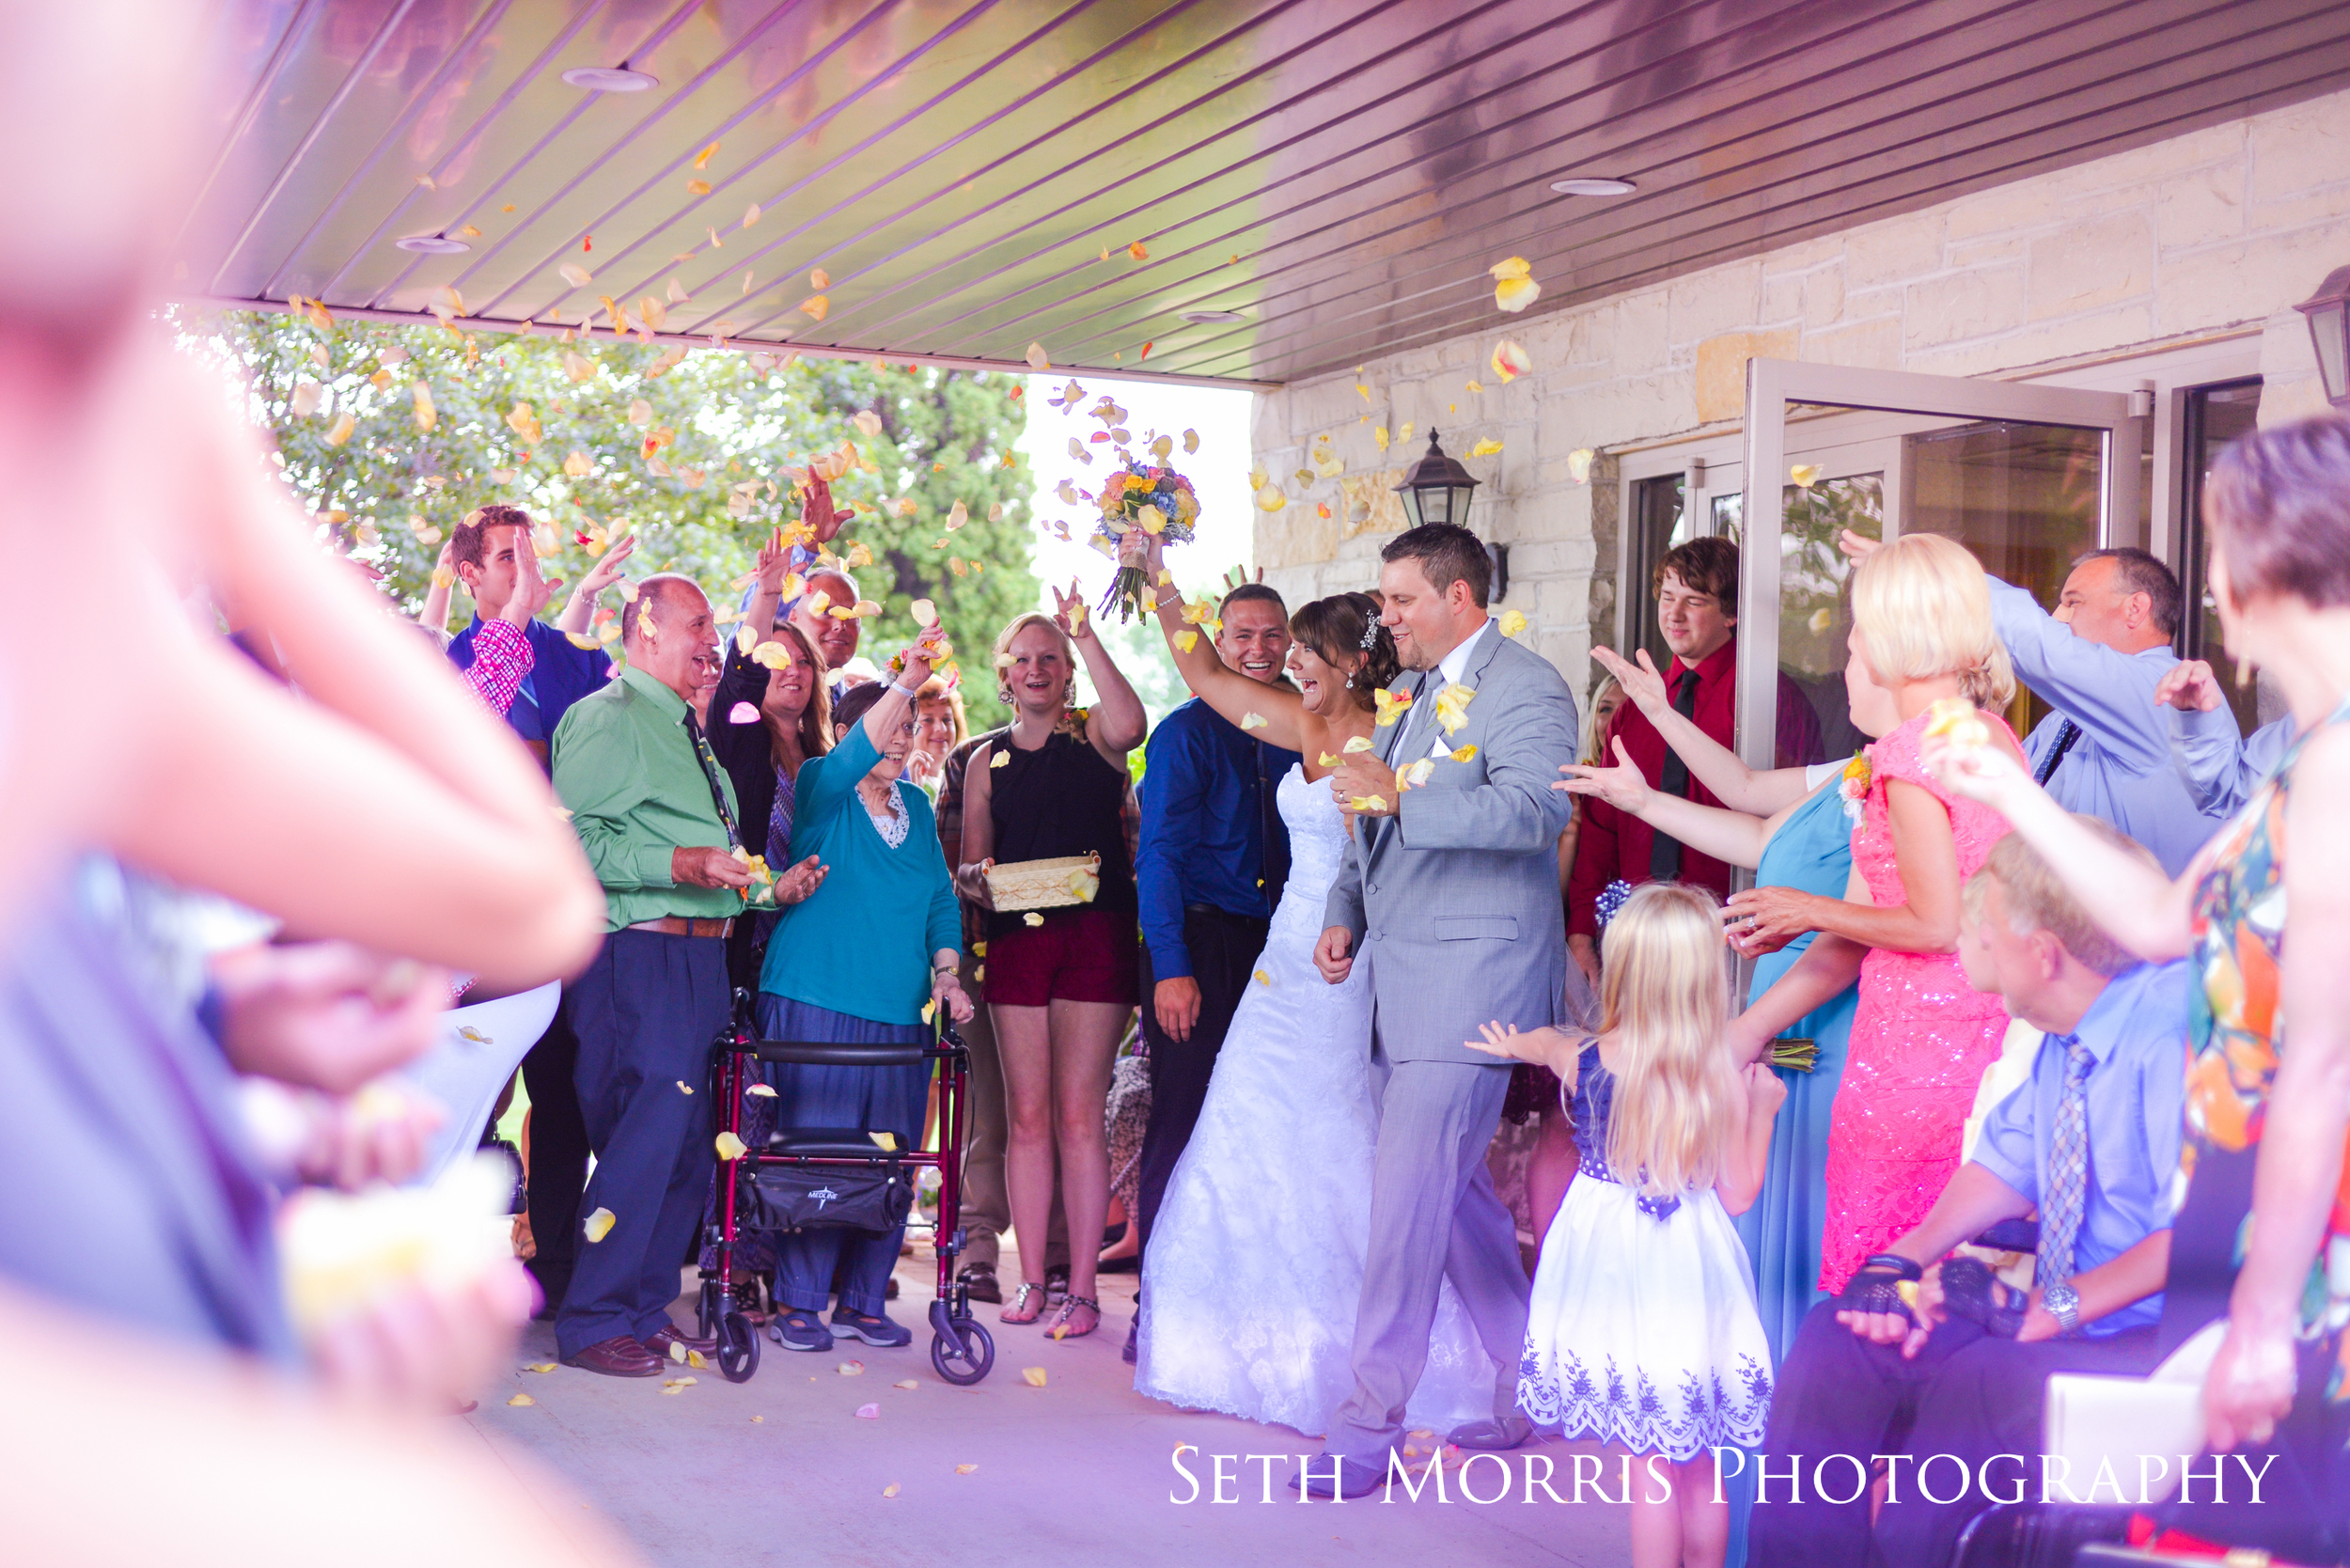 hornbaker-barn-wedding-photo-princeton-photographer-27.jpg